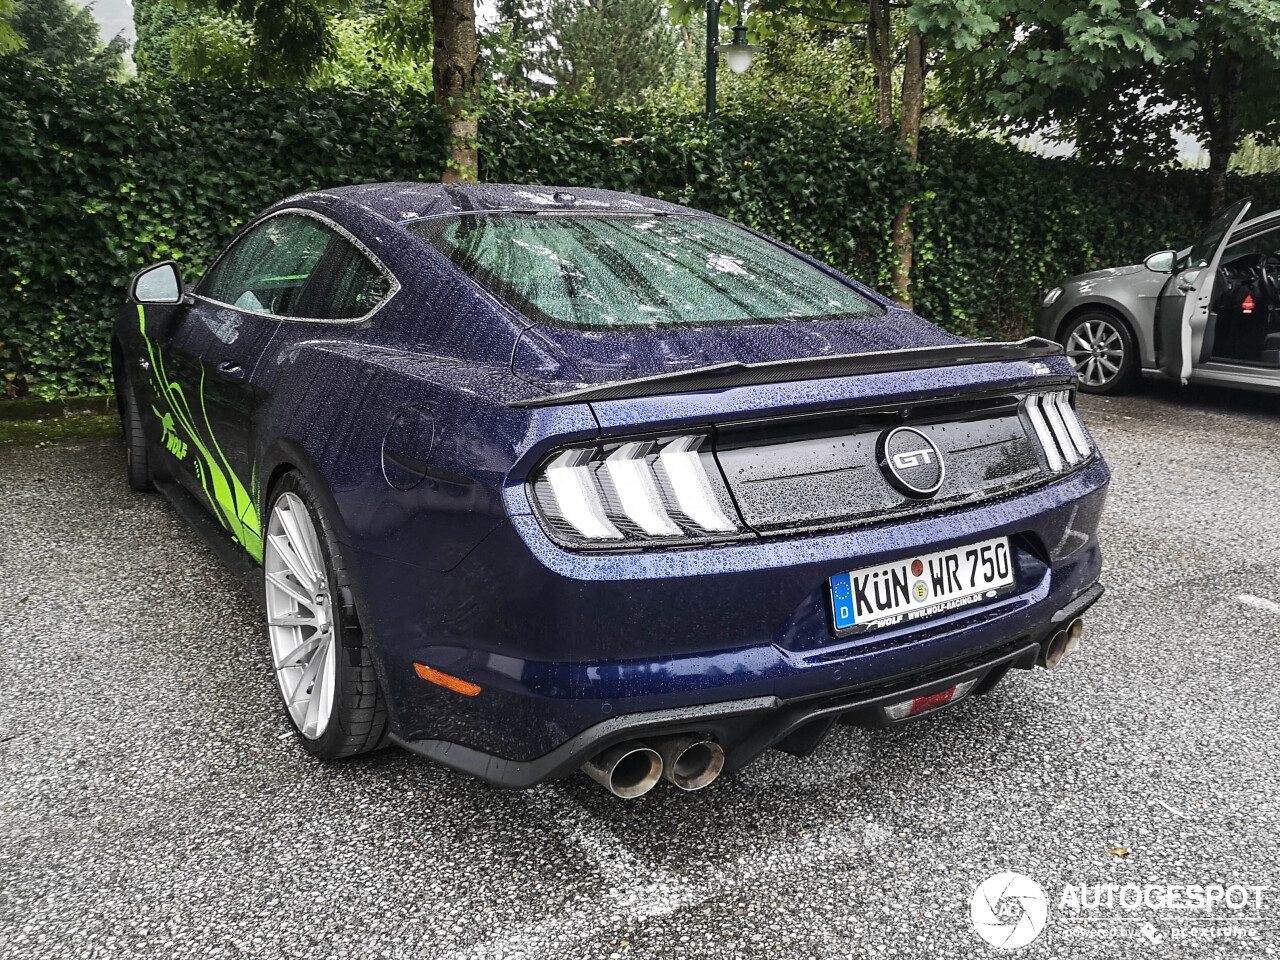 Ford Mustang GT 2018 Wolf Racing - 30 September 2019 - Autogespot